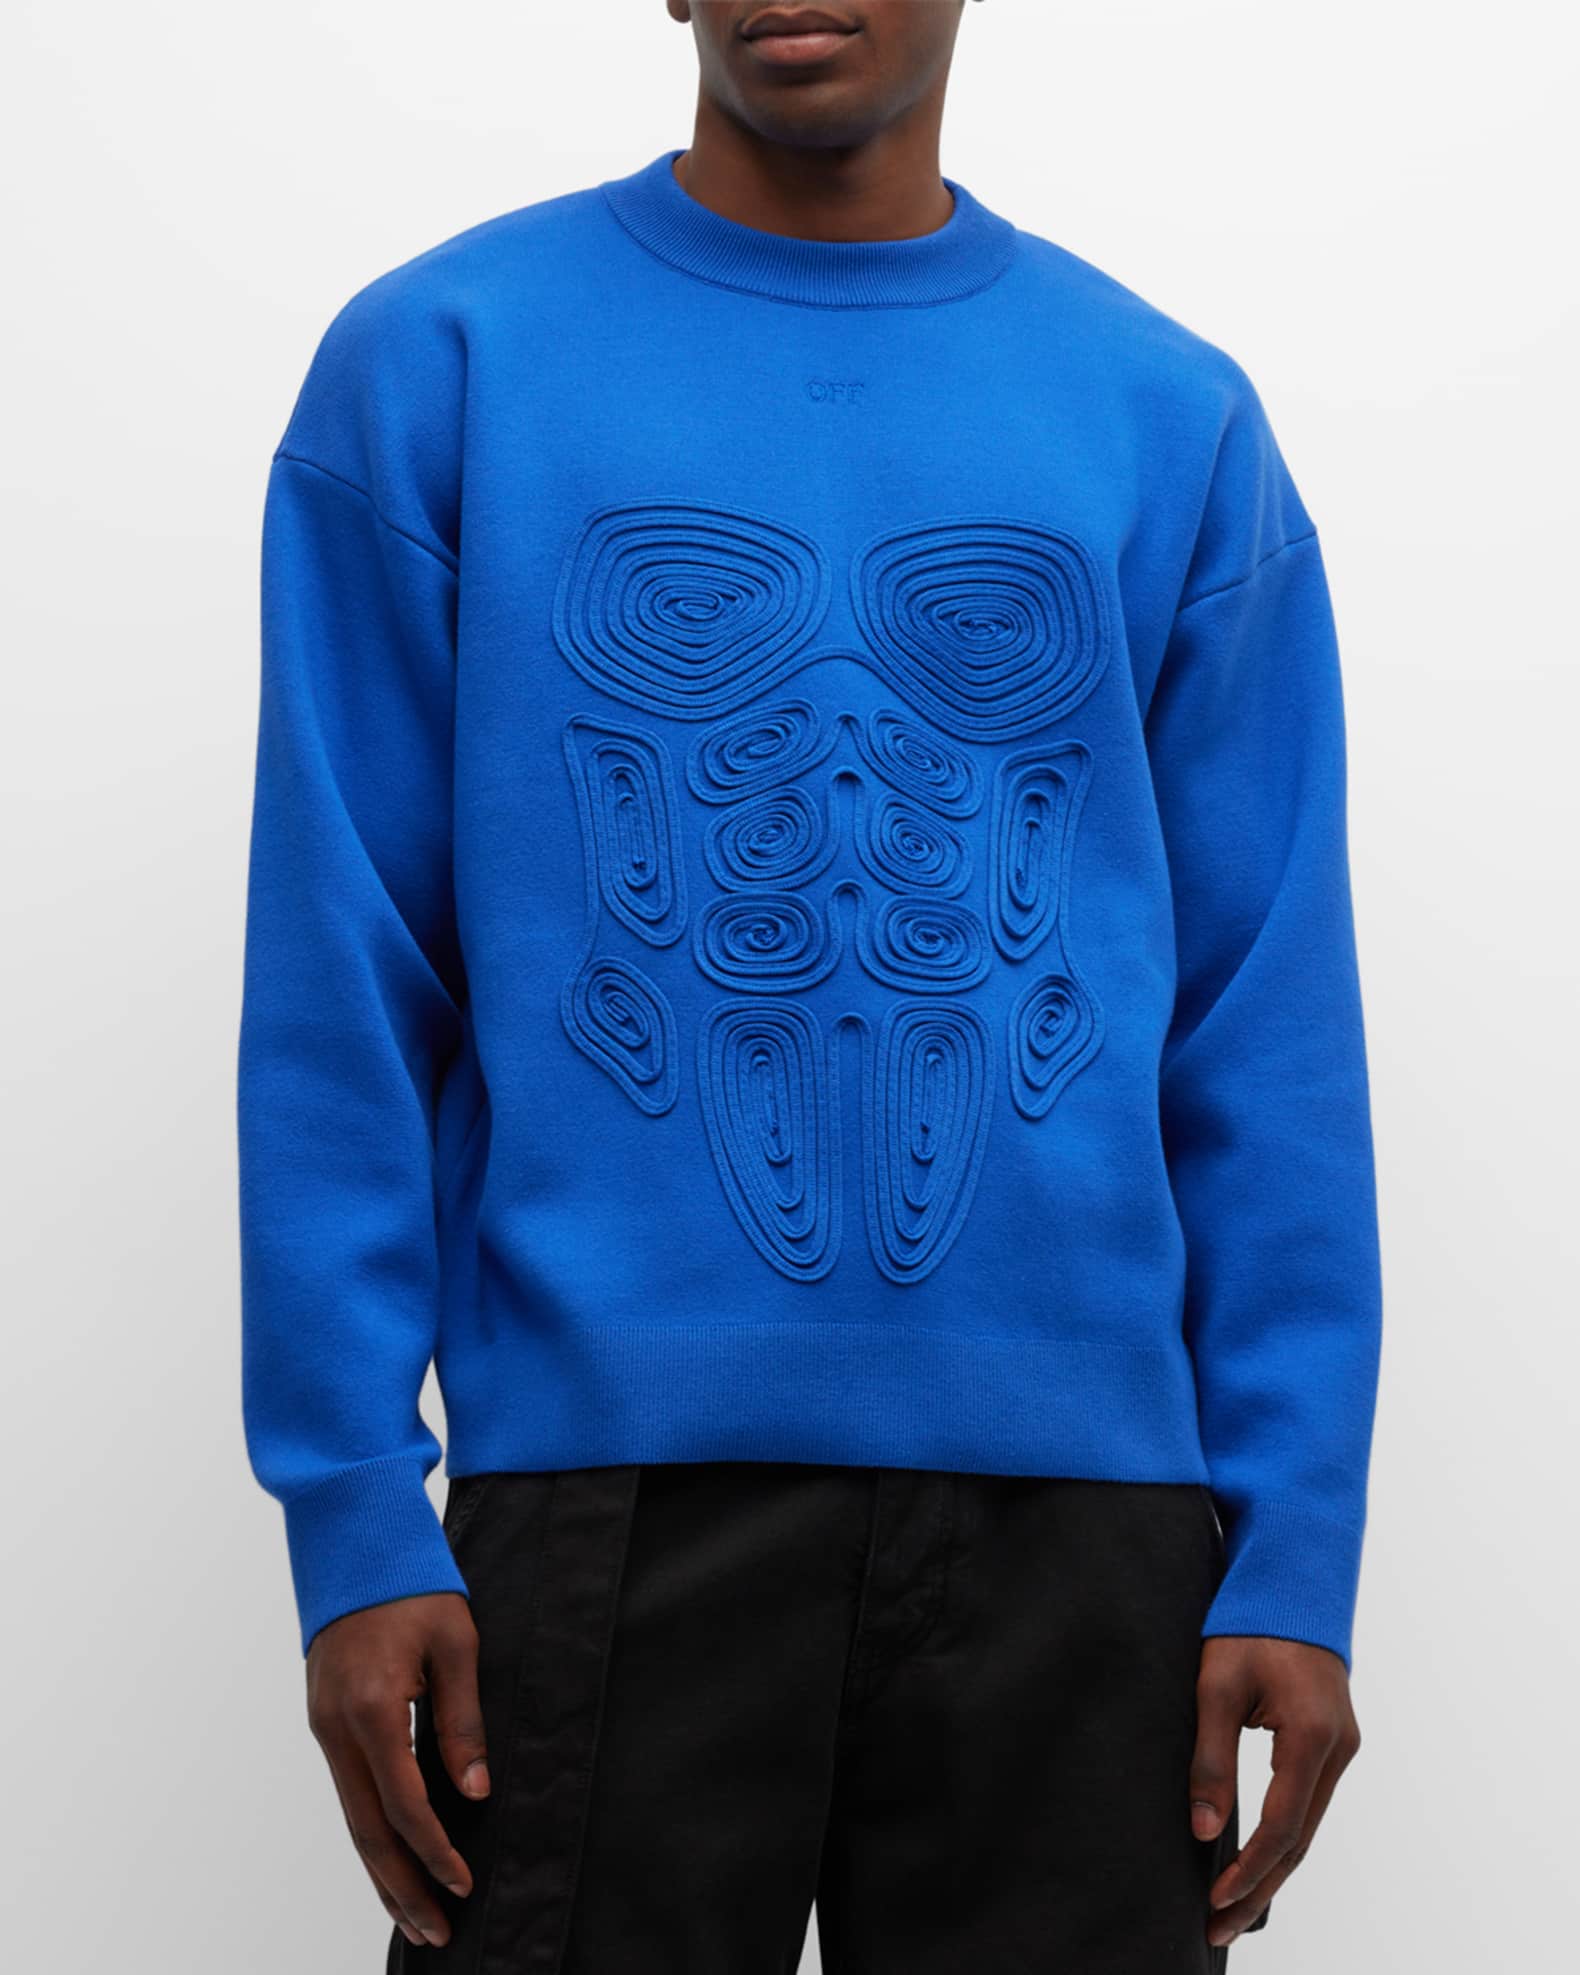 Off-White c/o Virgil Abloh Blue Cotton Blend Sweater for Men